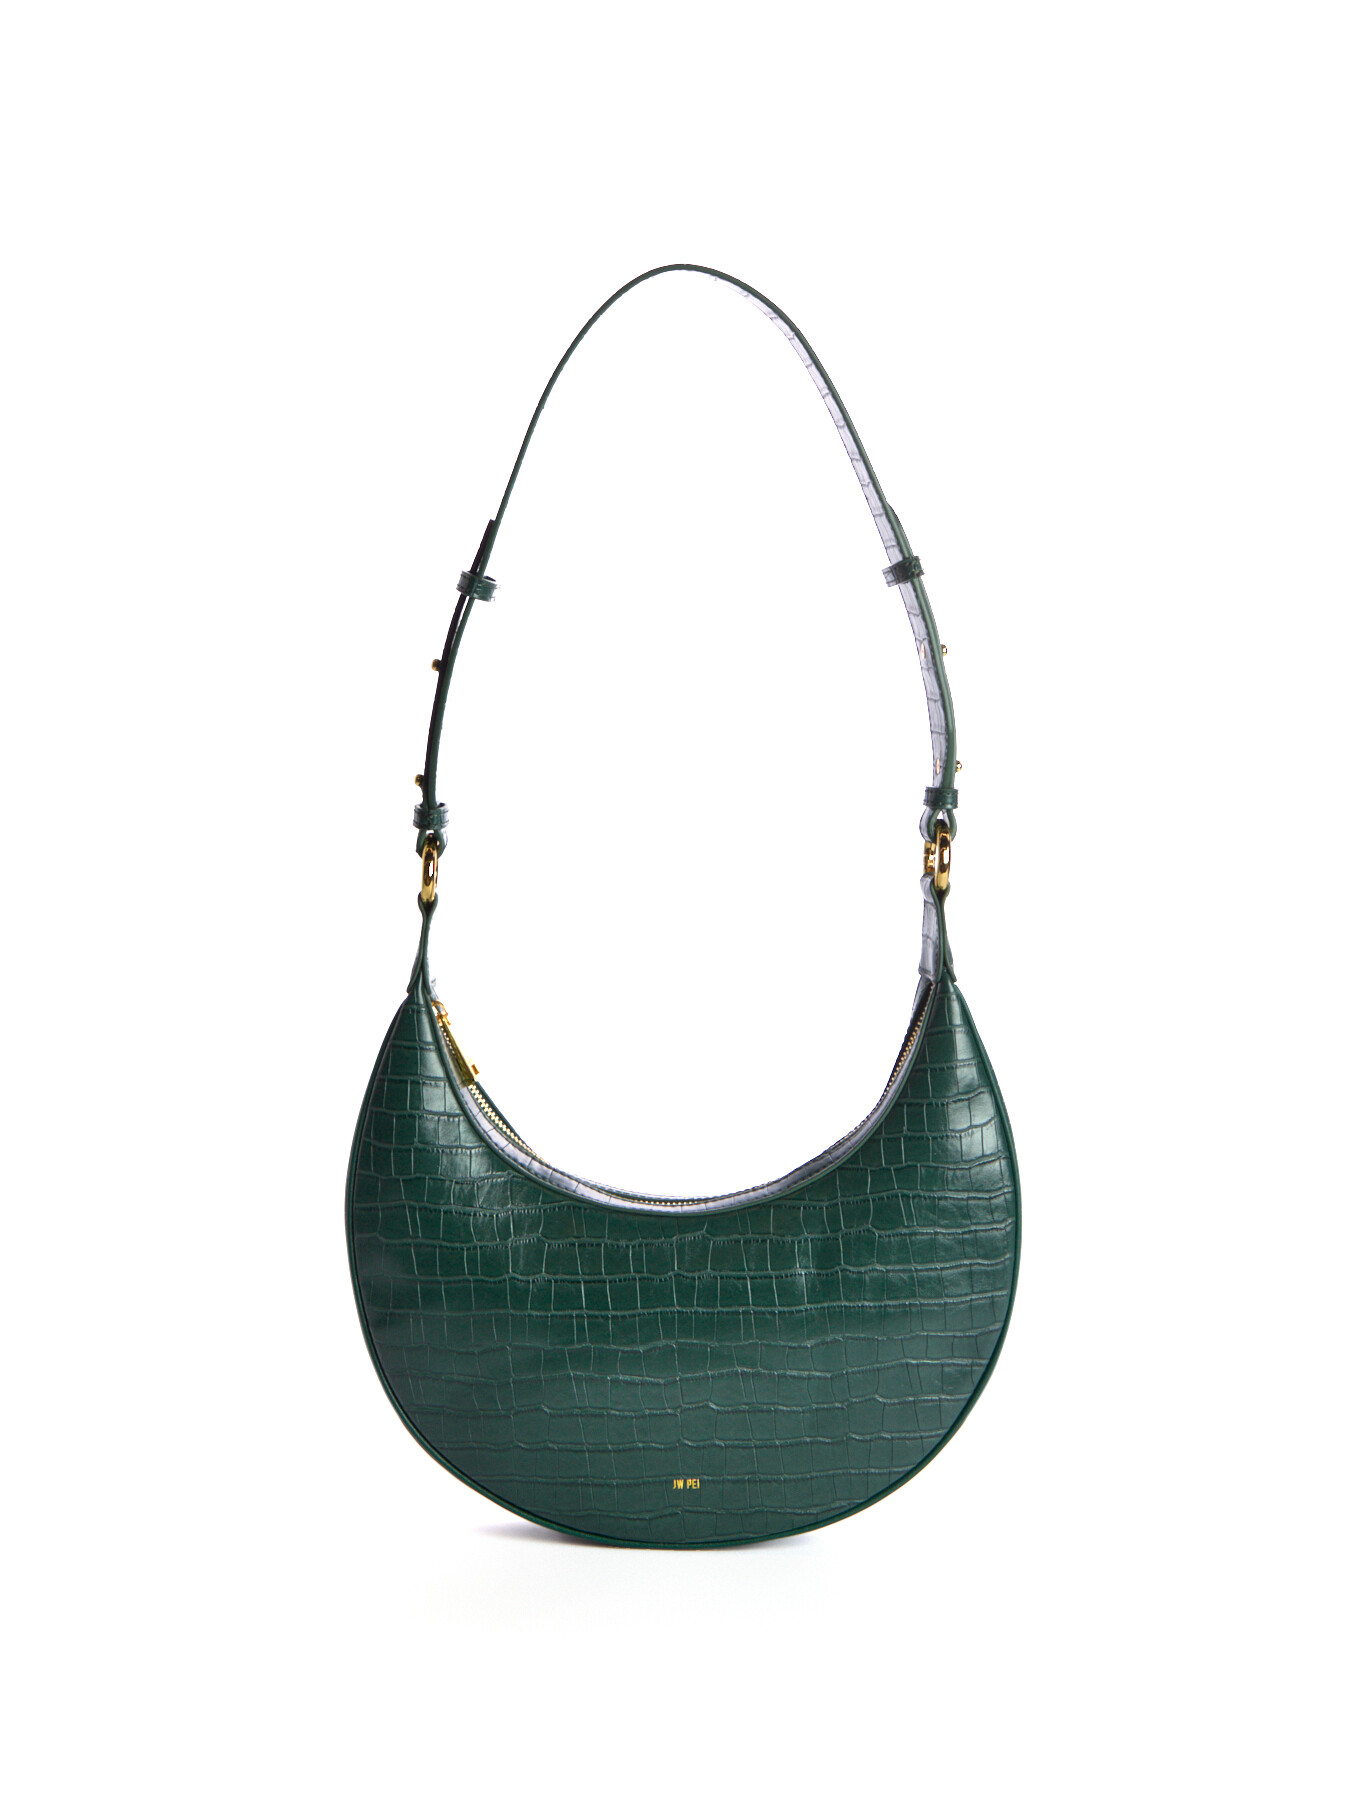 Jw Pei Women's Carly Saddle Bag Green